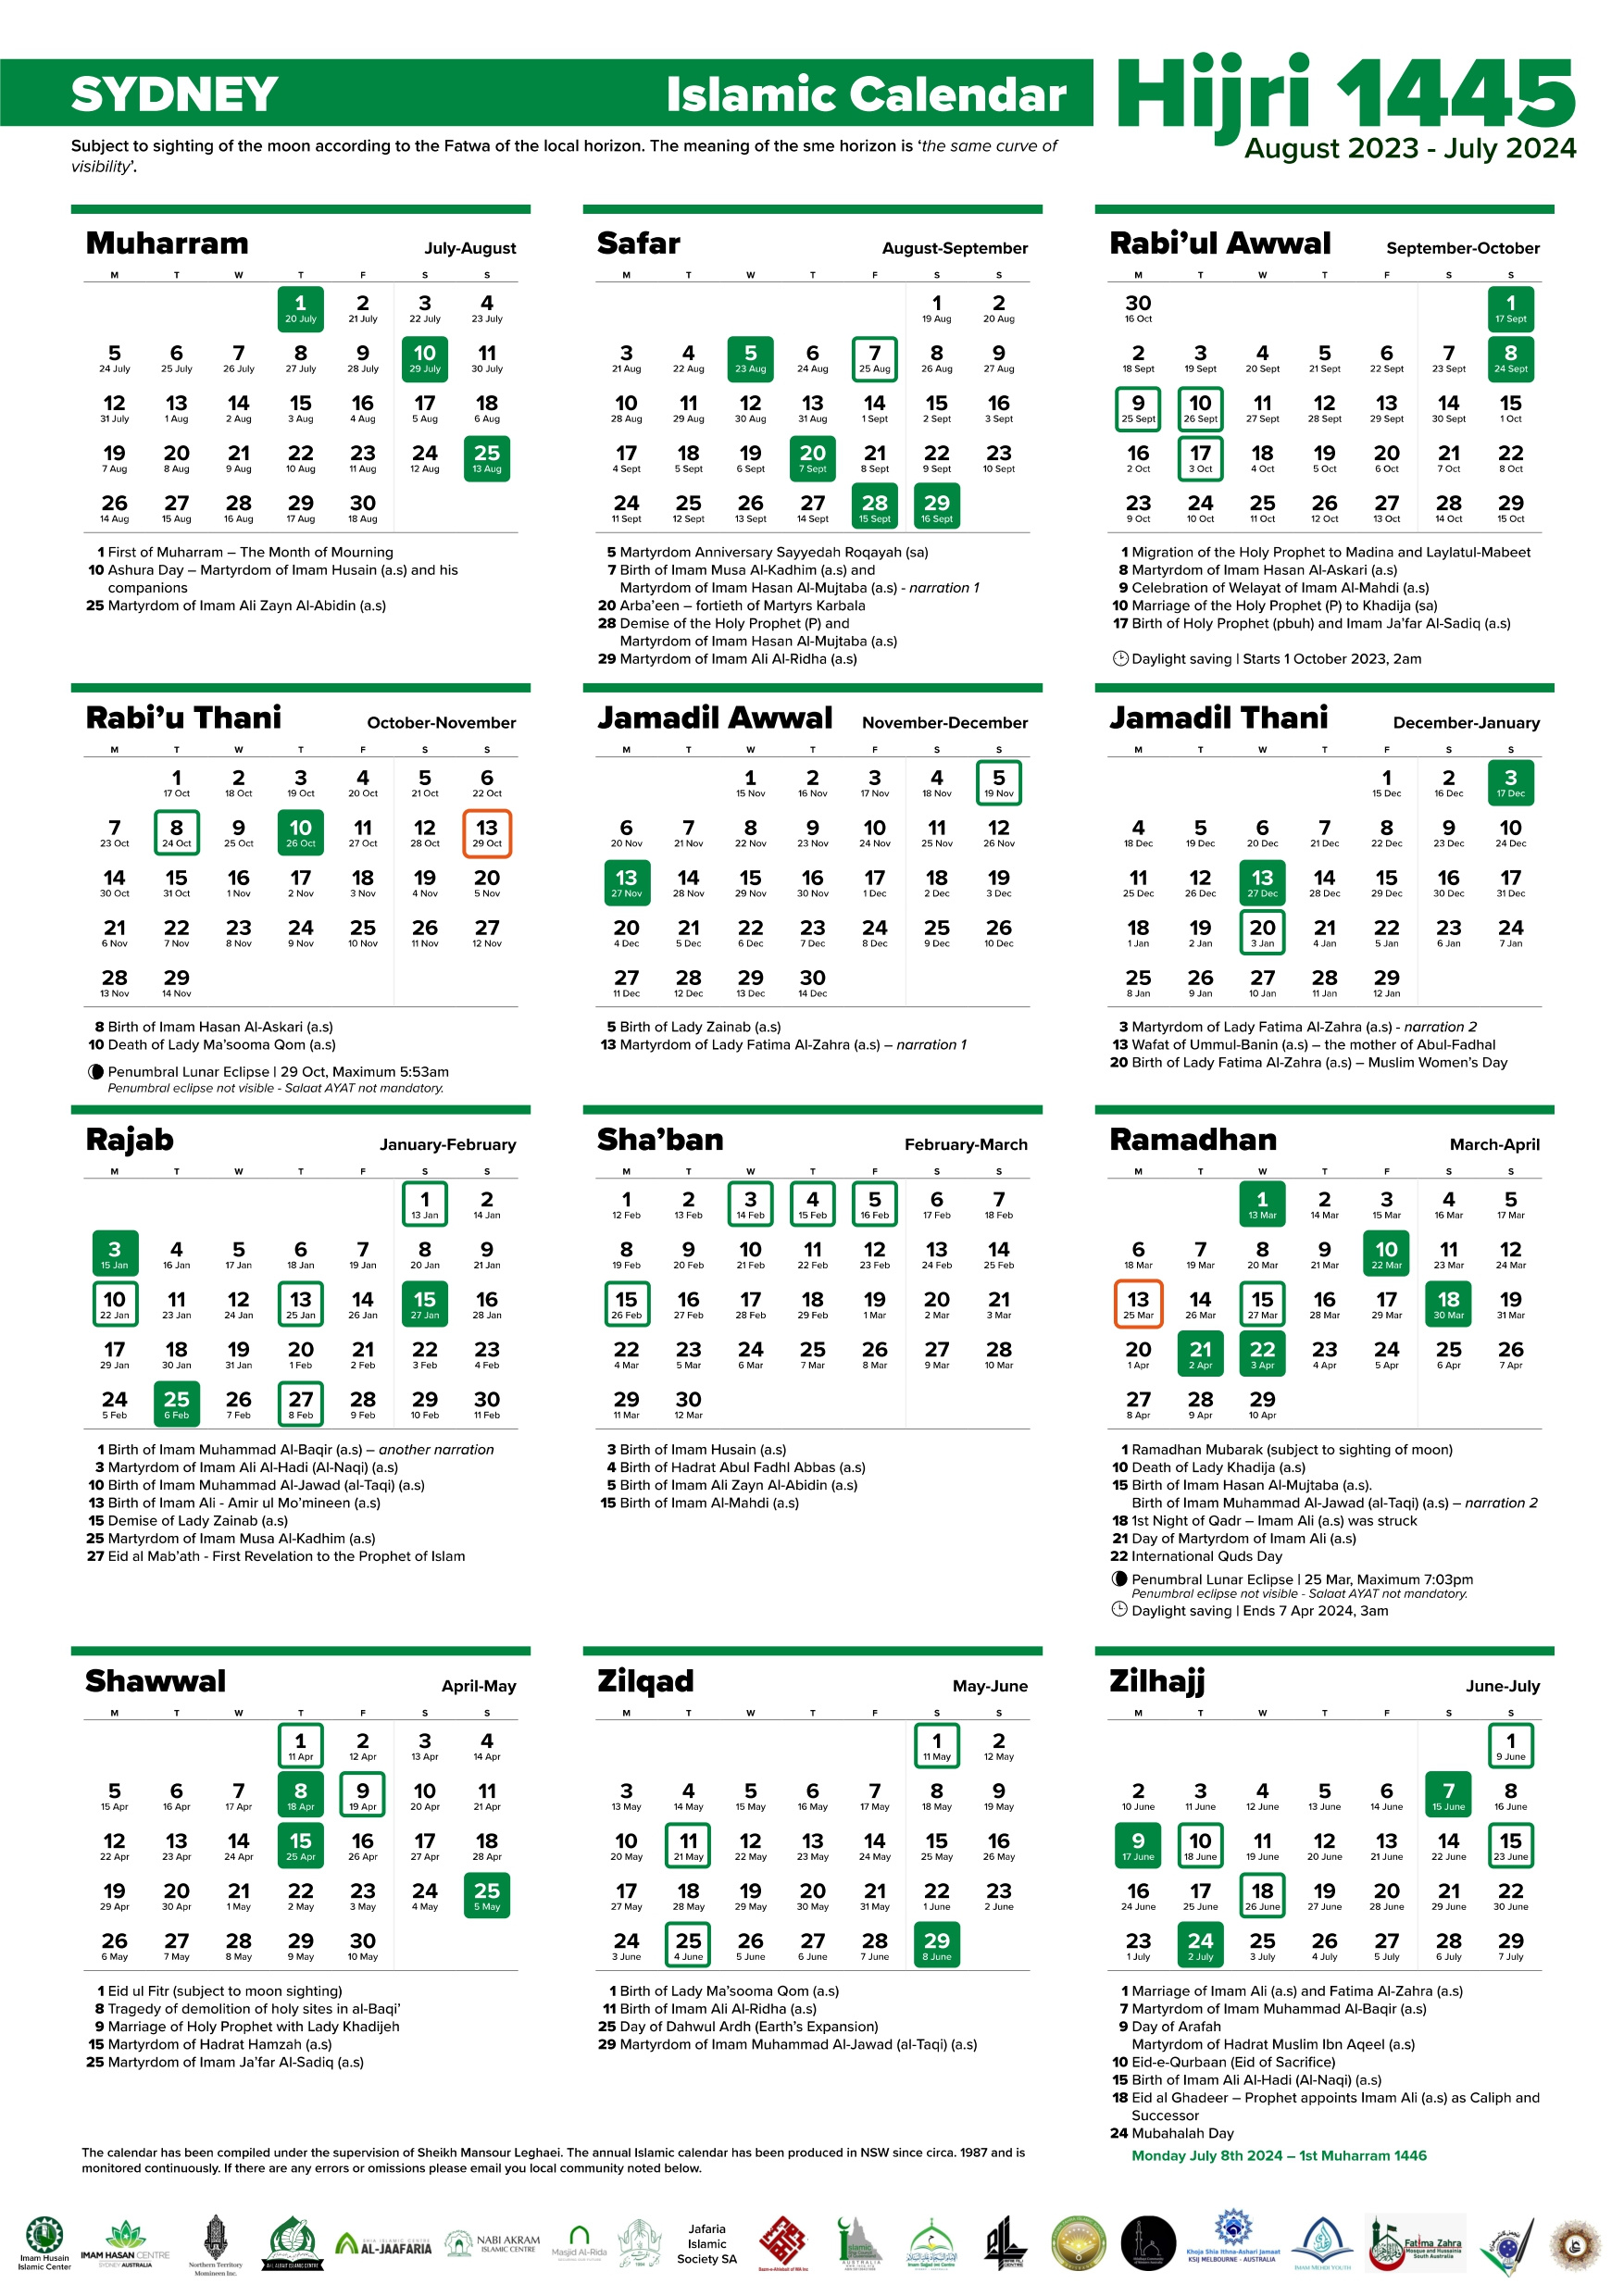 Annual Islamic Calendar 1445 Ah / 2023-2024 Ad – Imam Husain with regard to 7 July 2024 In Islamic Calendar